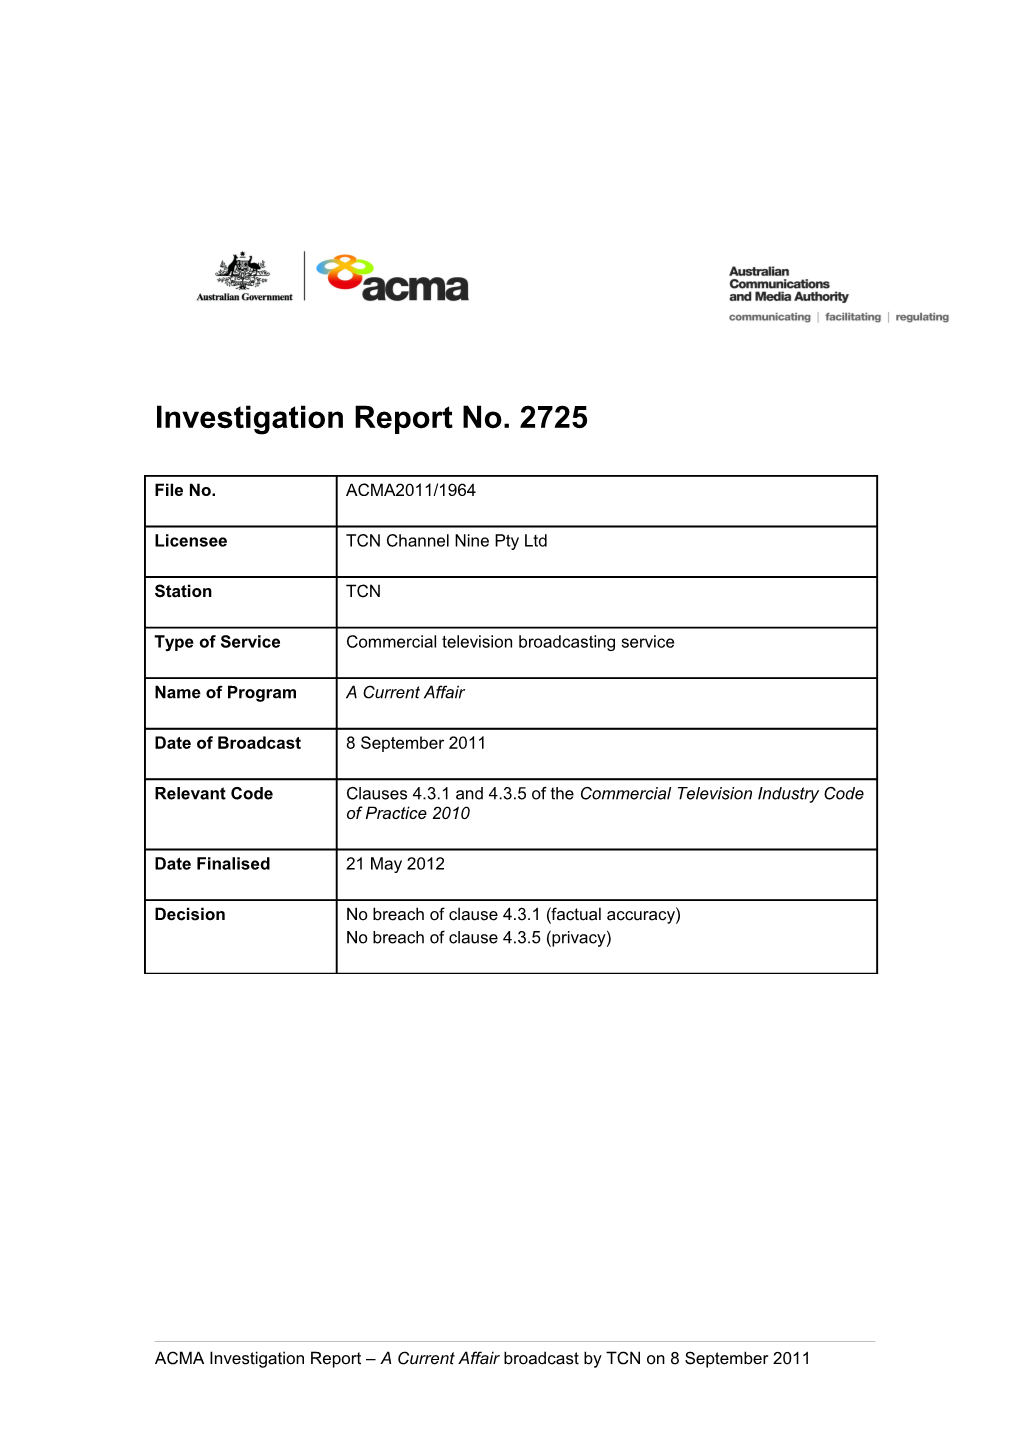 TCN 9 - ACMA Investigation Report 2725